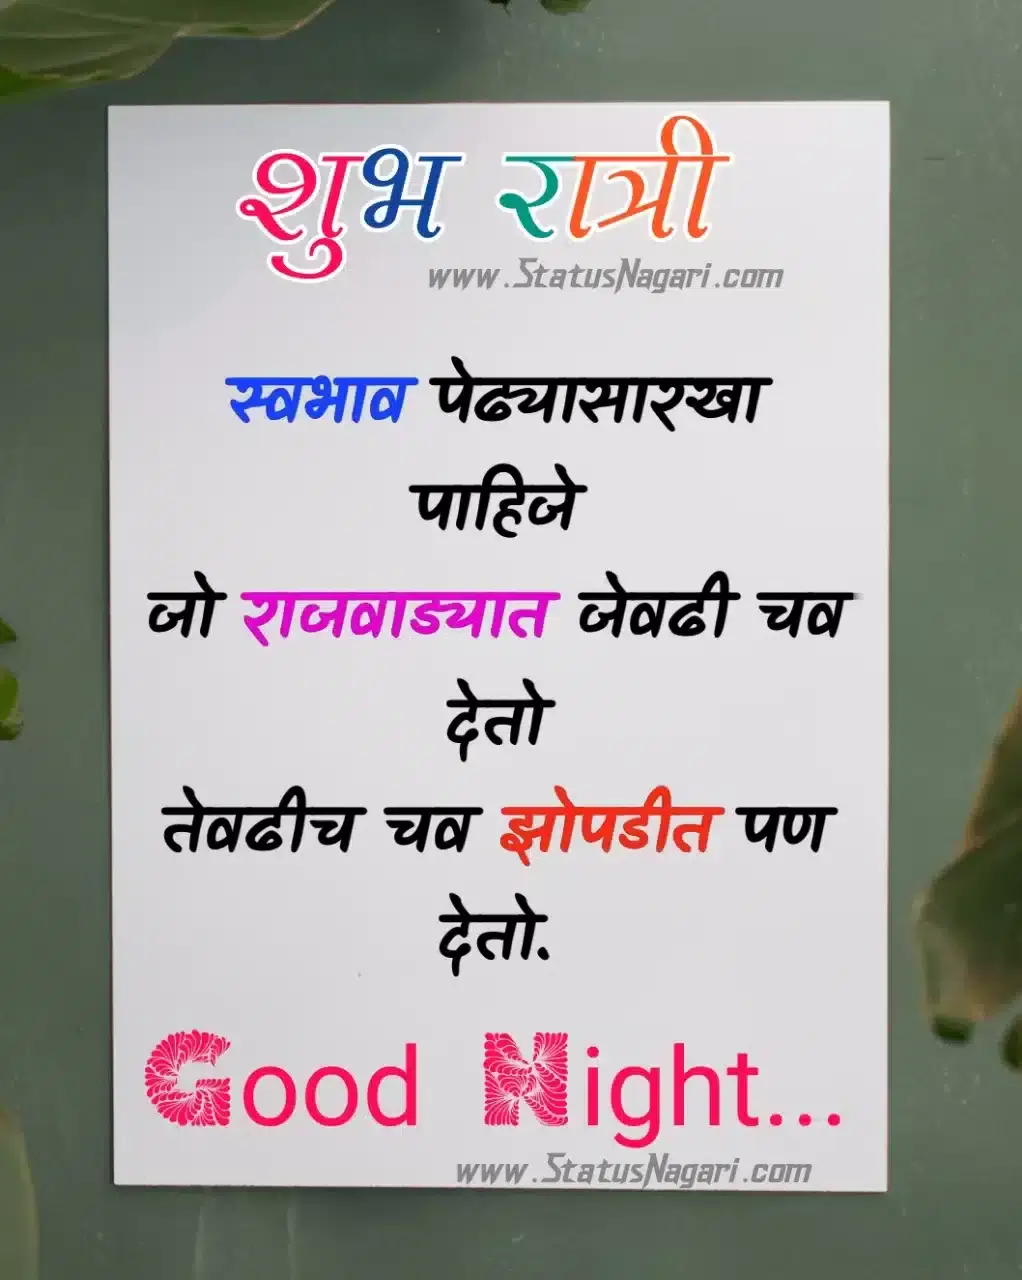 गुड नाईट इमेजस शुभ रात्री संदेश - Good Night Images Shubh Ratri Images शुभ रात्री shubh ratri शुभ रात्री मैत्री संदेश good night marathi शुभ रात्री शुभेच्छा मराठी shubh ratri message